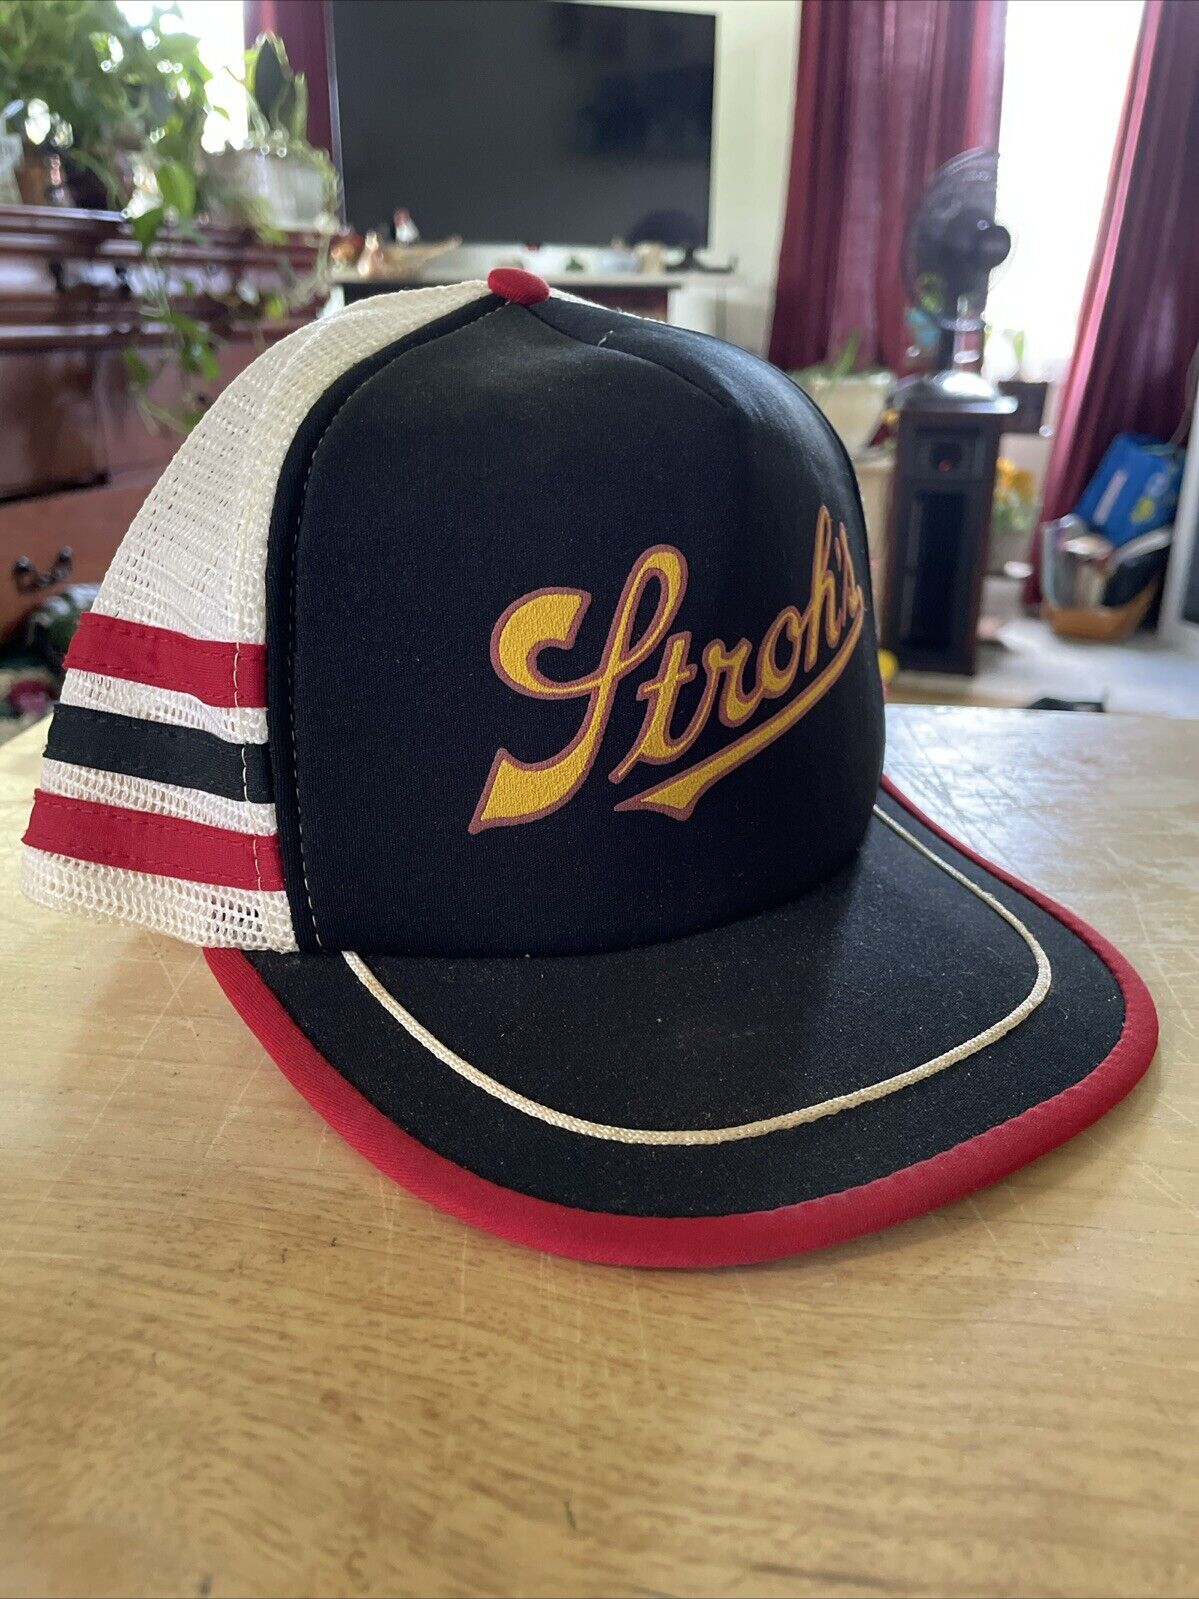 Vintage Stroh\'s Beer 3 Stripe Truckers Hat Cap Snapback Mesh Black Red Gold